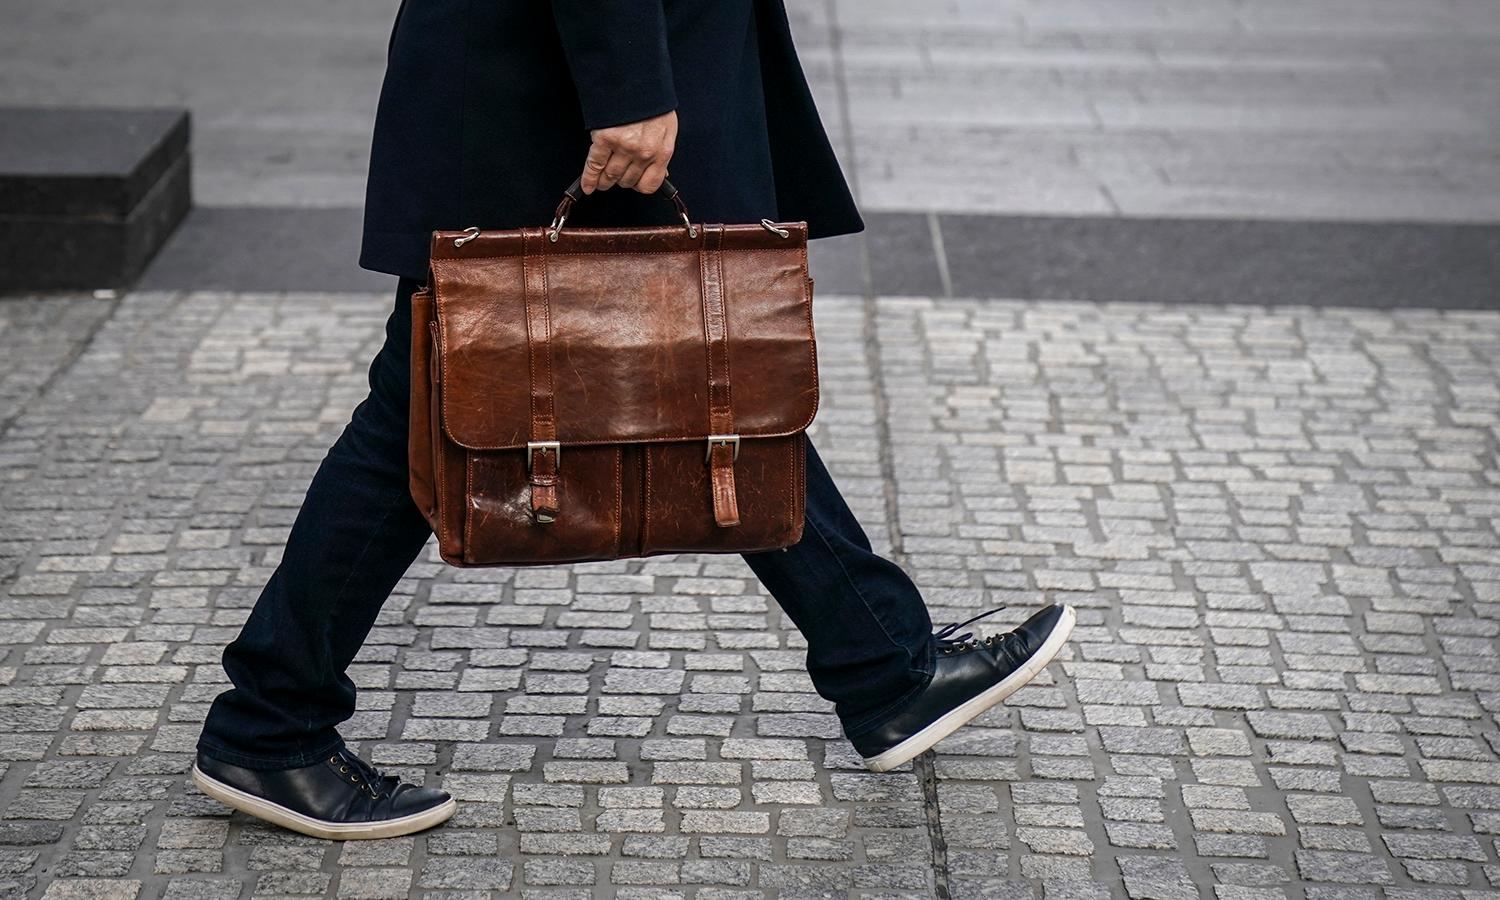 A man carries a briefcase as he walks.)